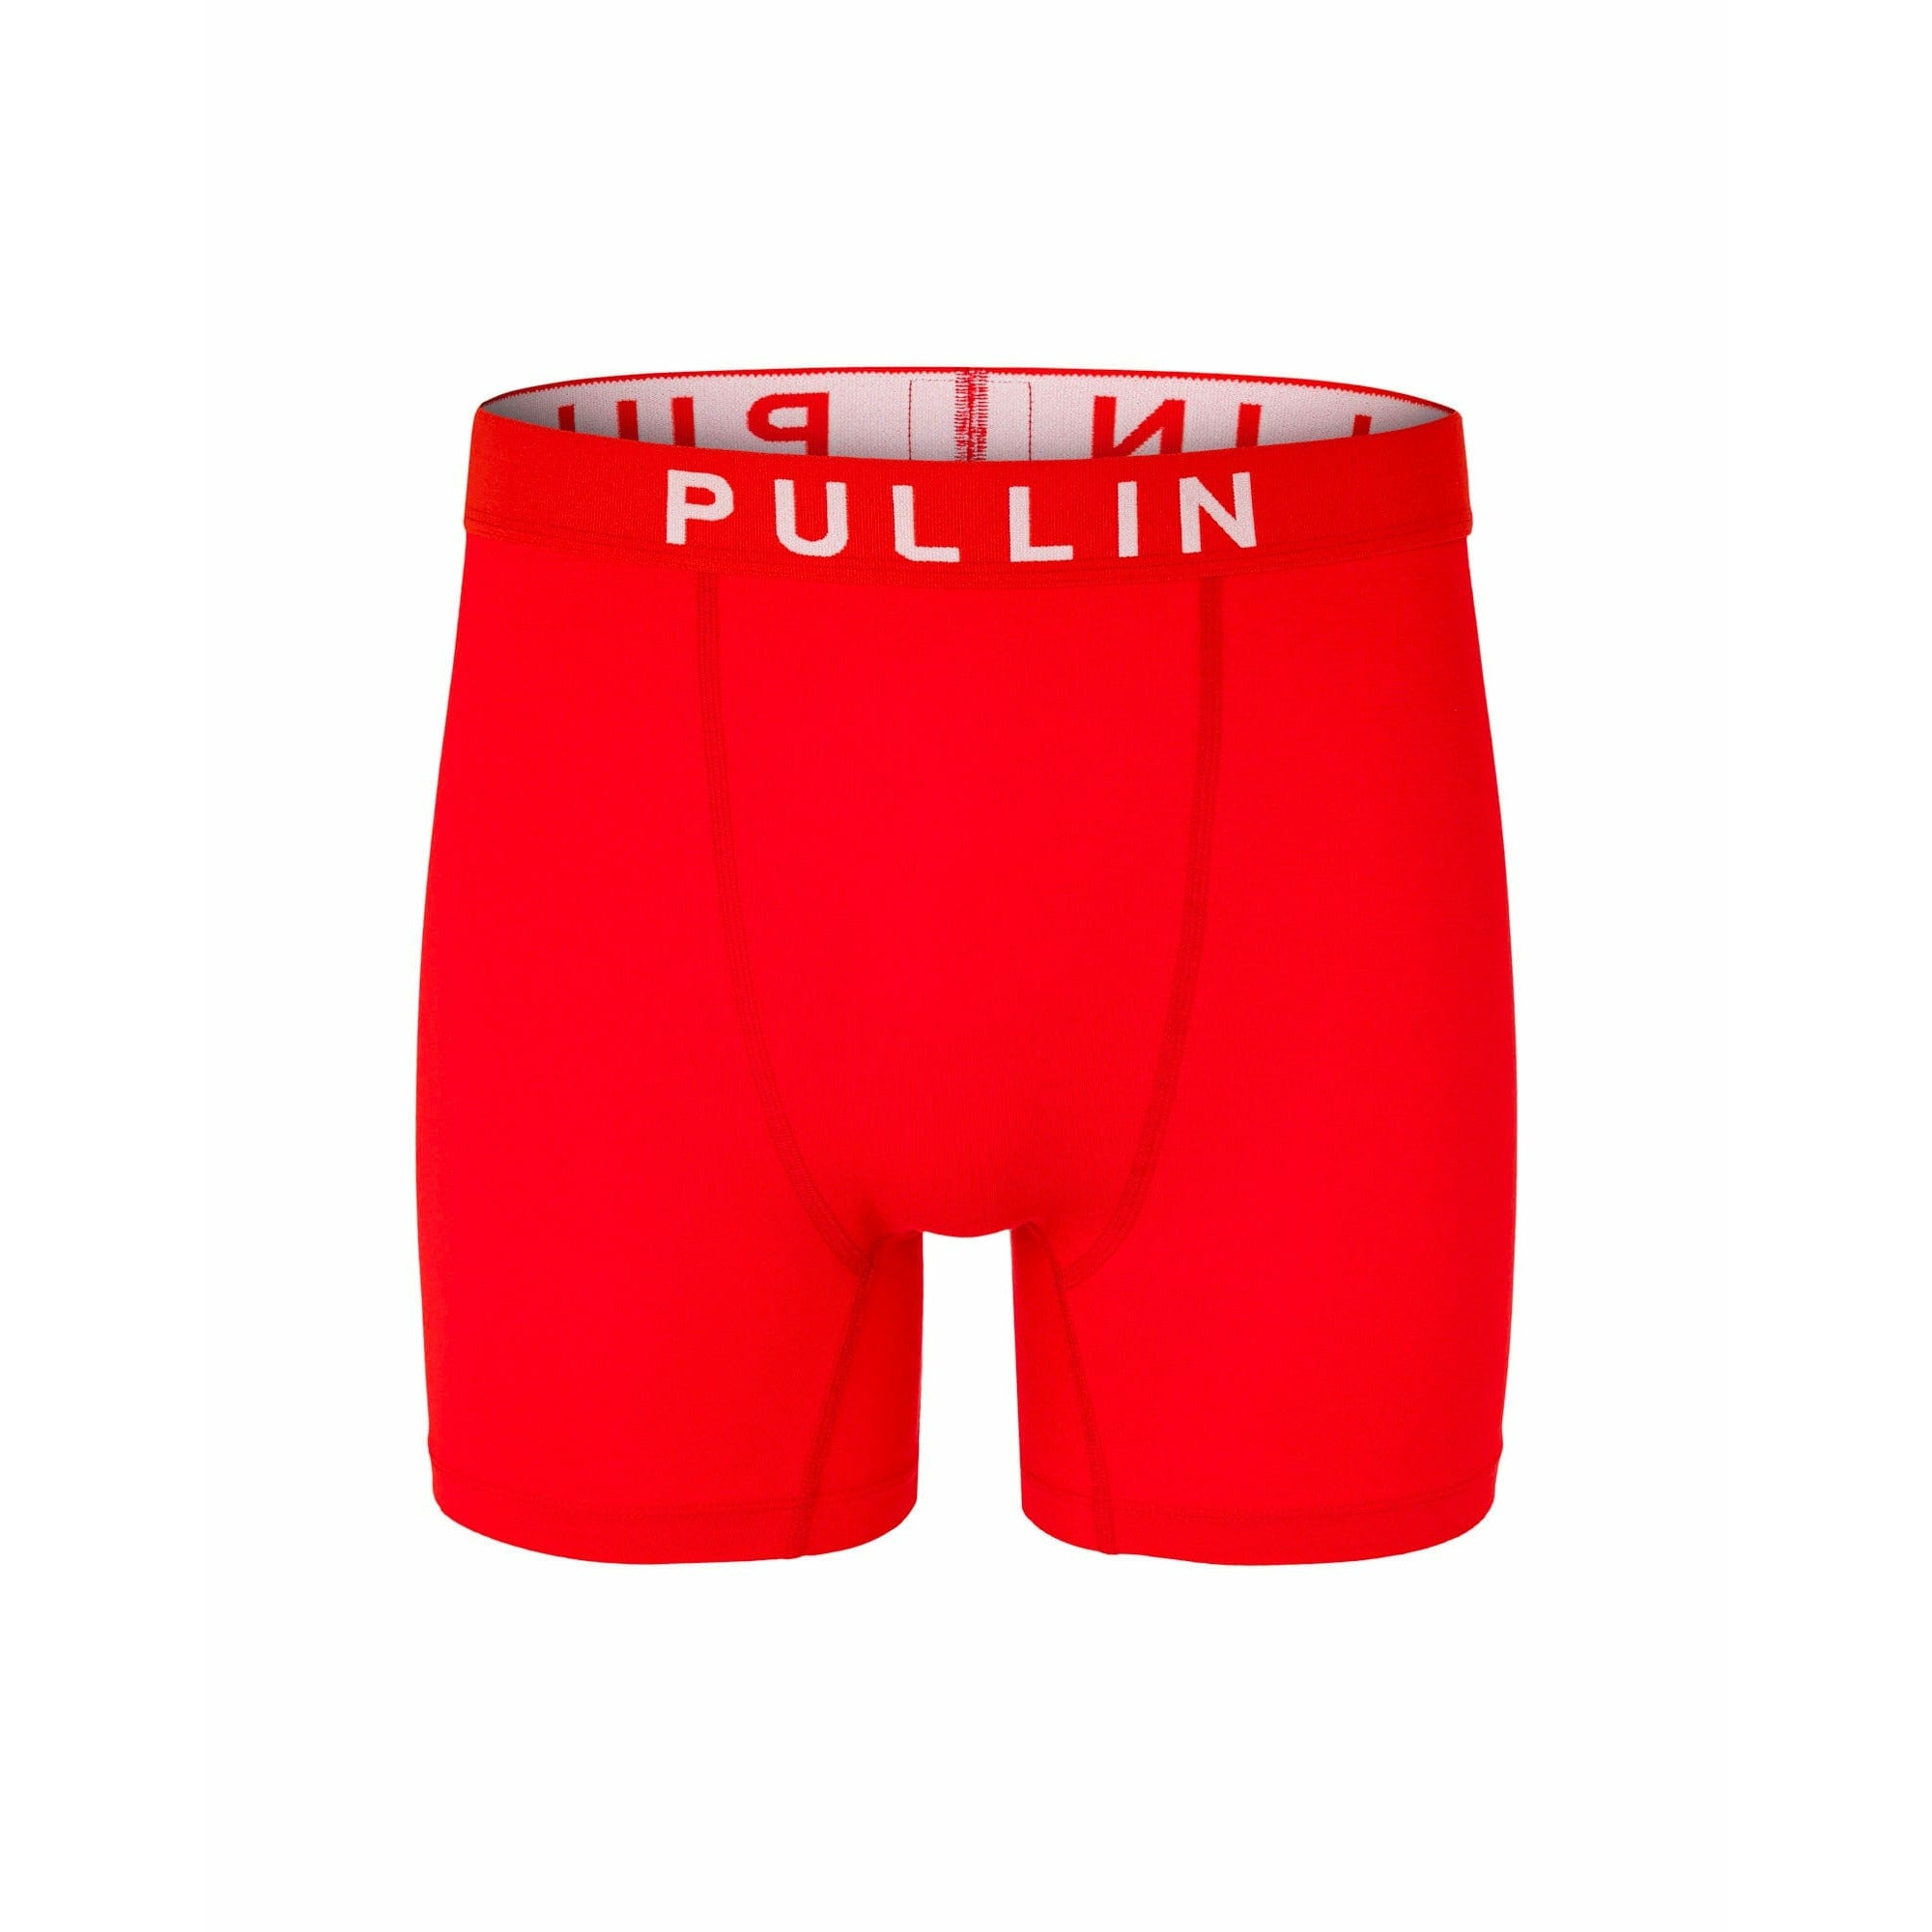 Pullin Fashion 2 Red21 Boxer Brief - Underground Clothing